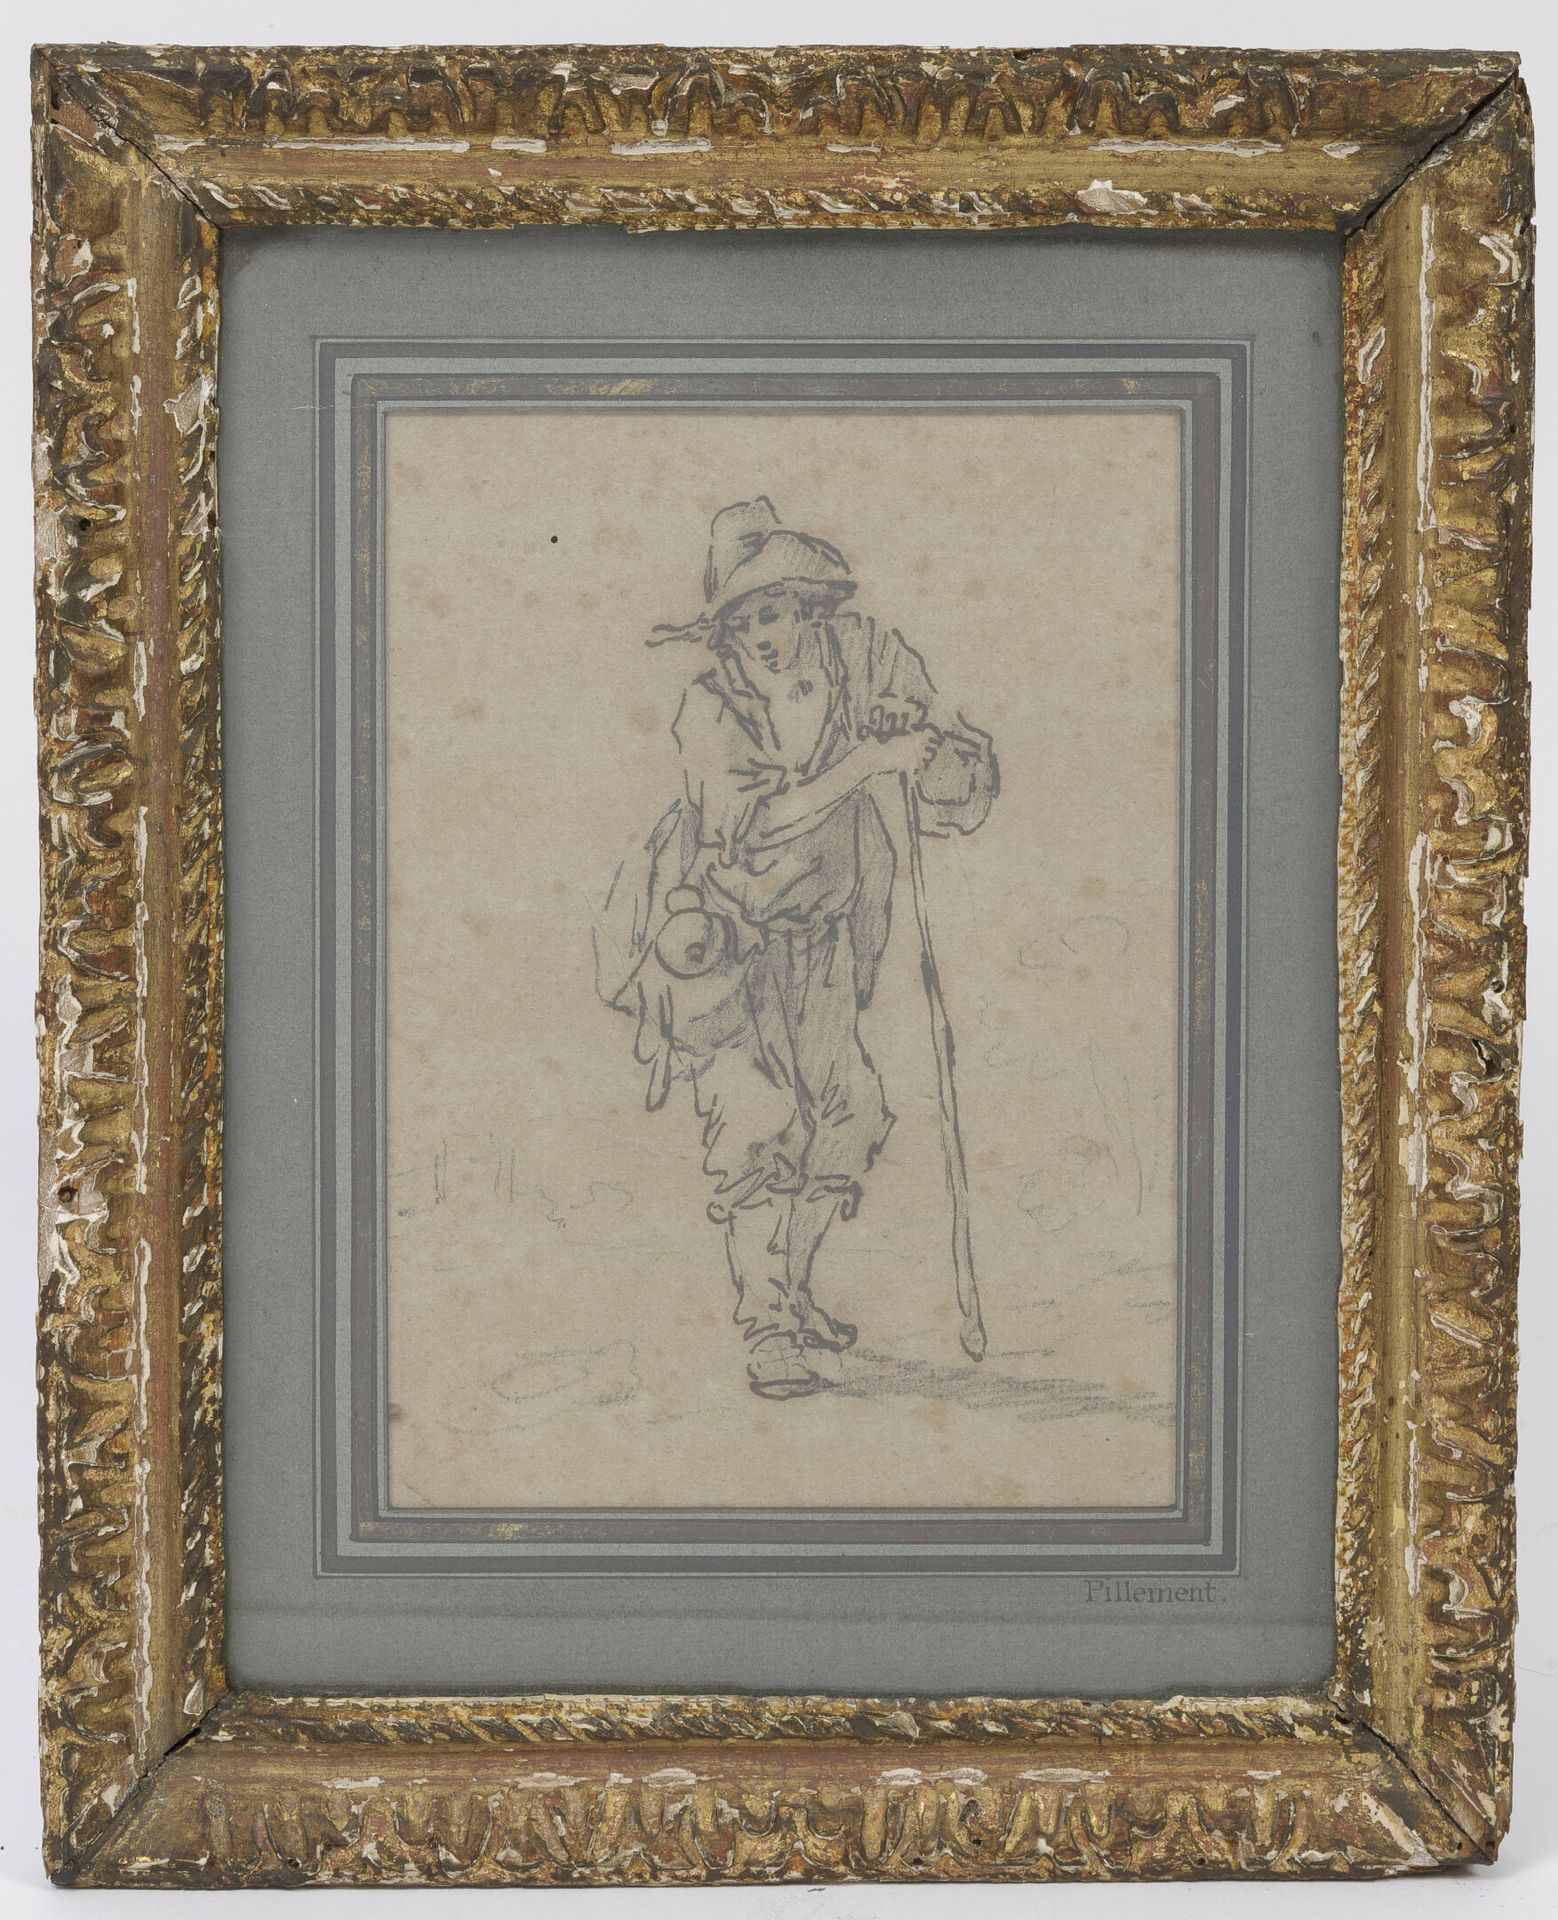 Attribué à Jean-Baptiste PILLEMENT (1728-1808) 拿着棍子和葫芦的年轻村民。

用黑石、钢笔和棕色墨水绘制，粘贴在纸&hellip;